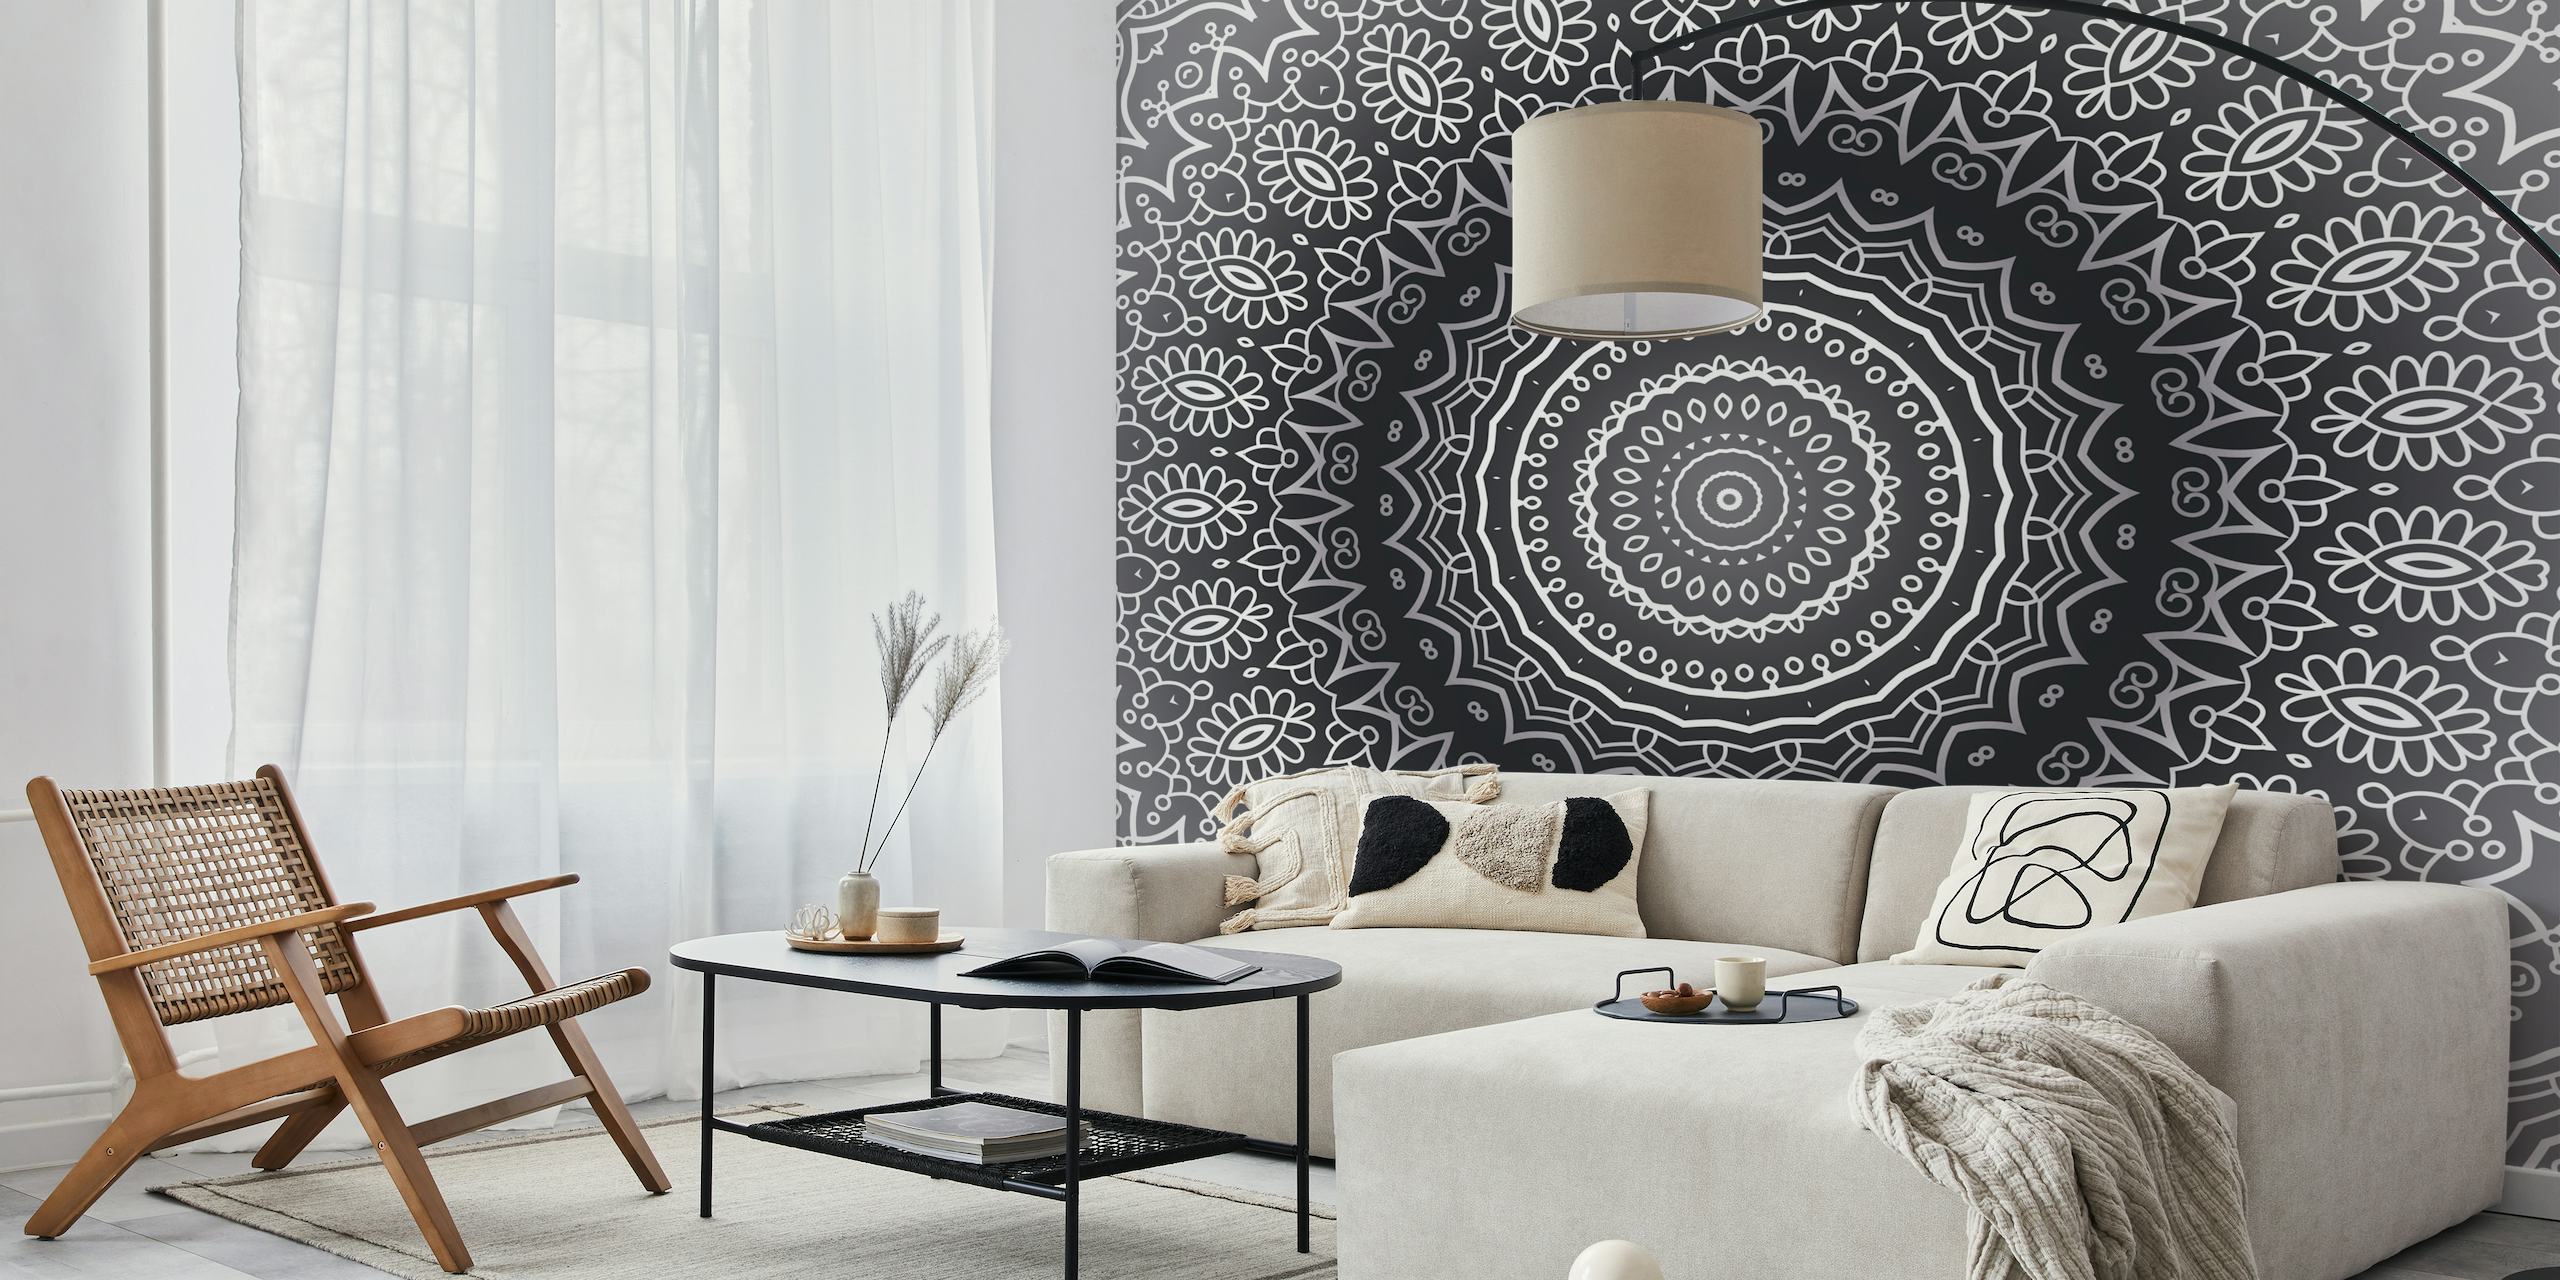 Grey Mandala wall mural with intricate patterns